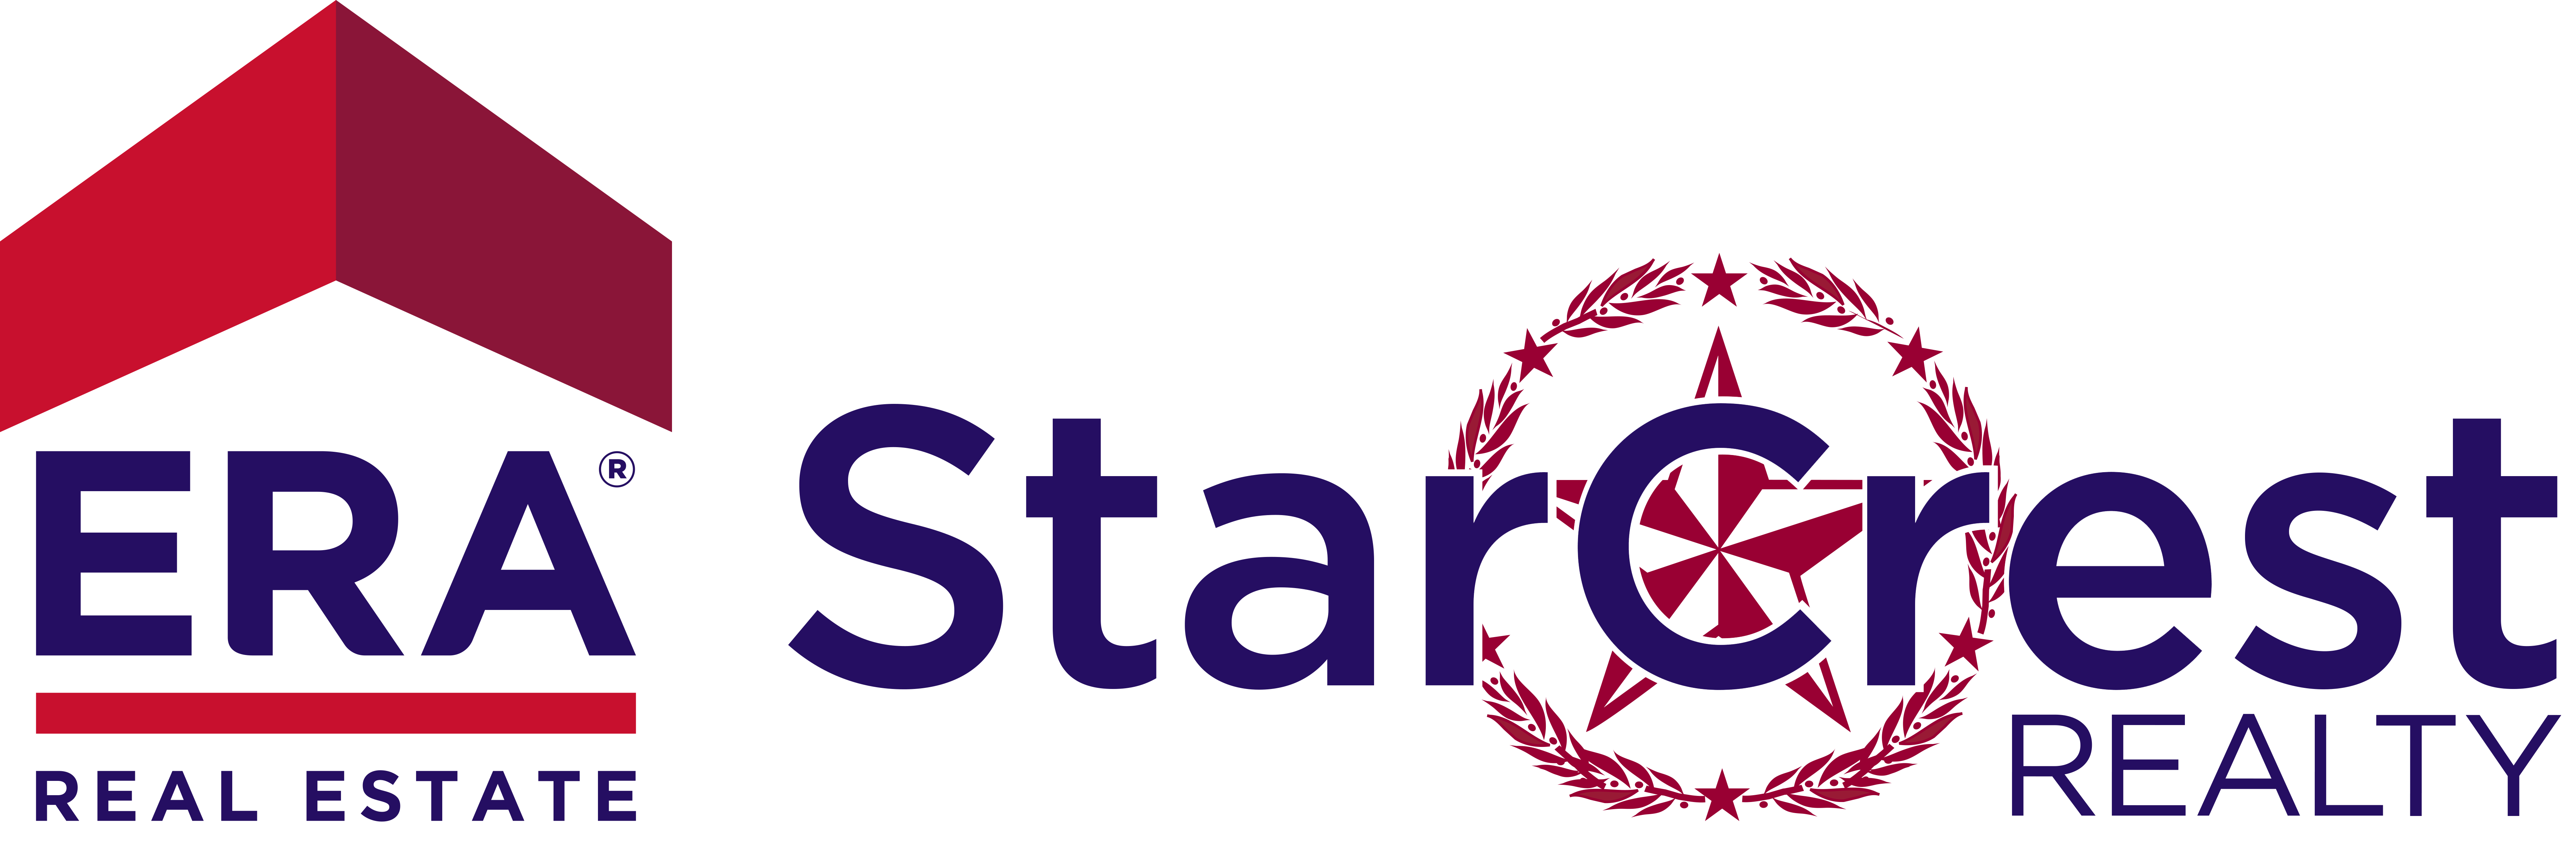 StarCrest Realty logo